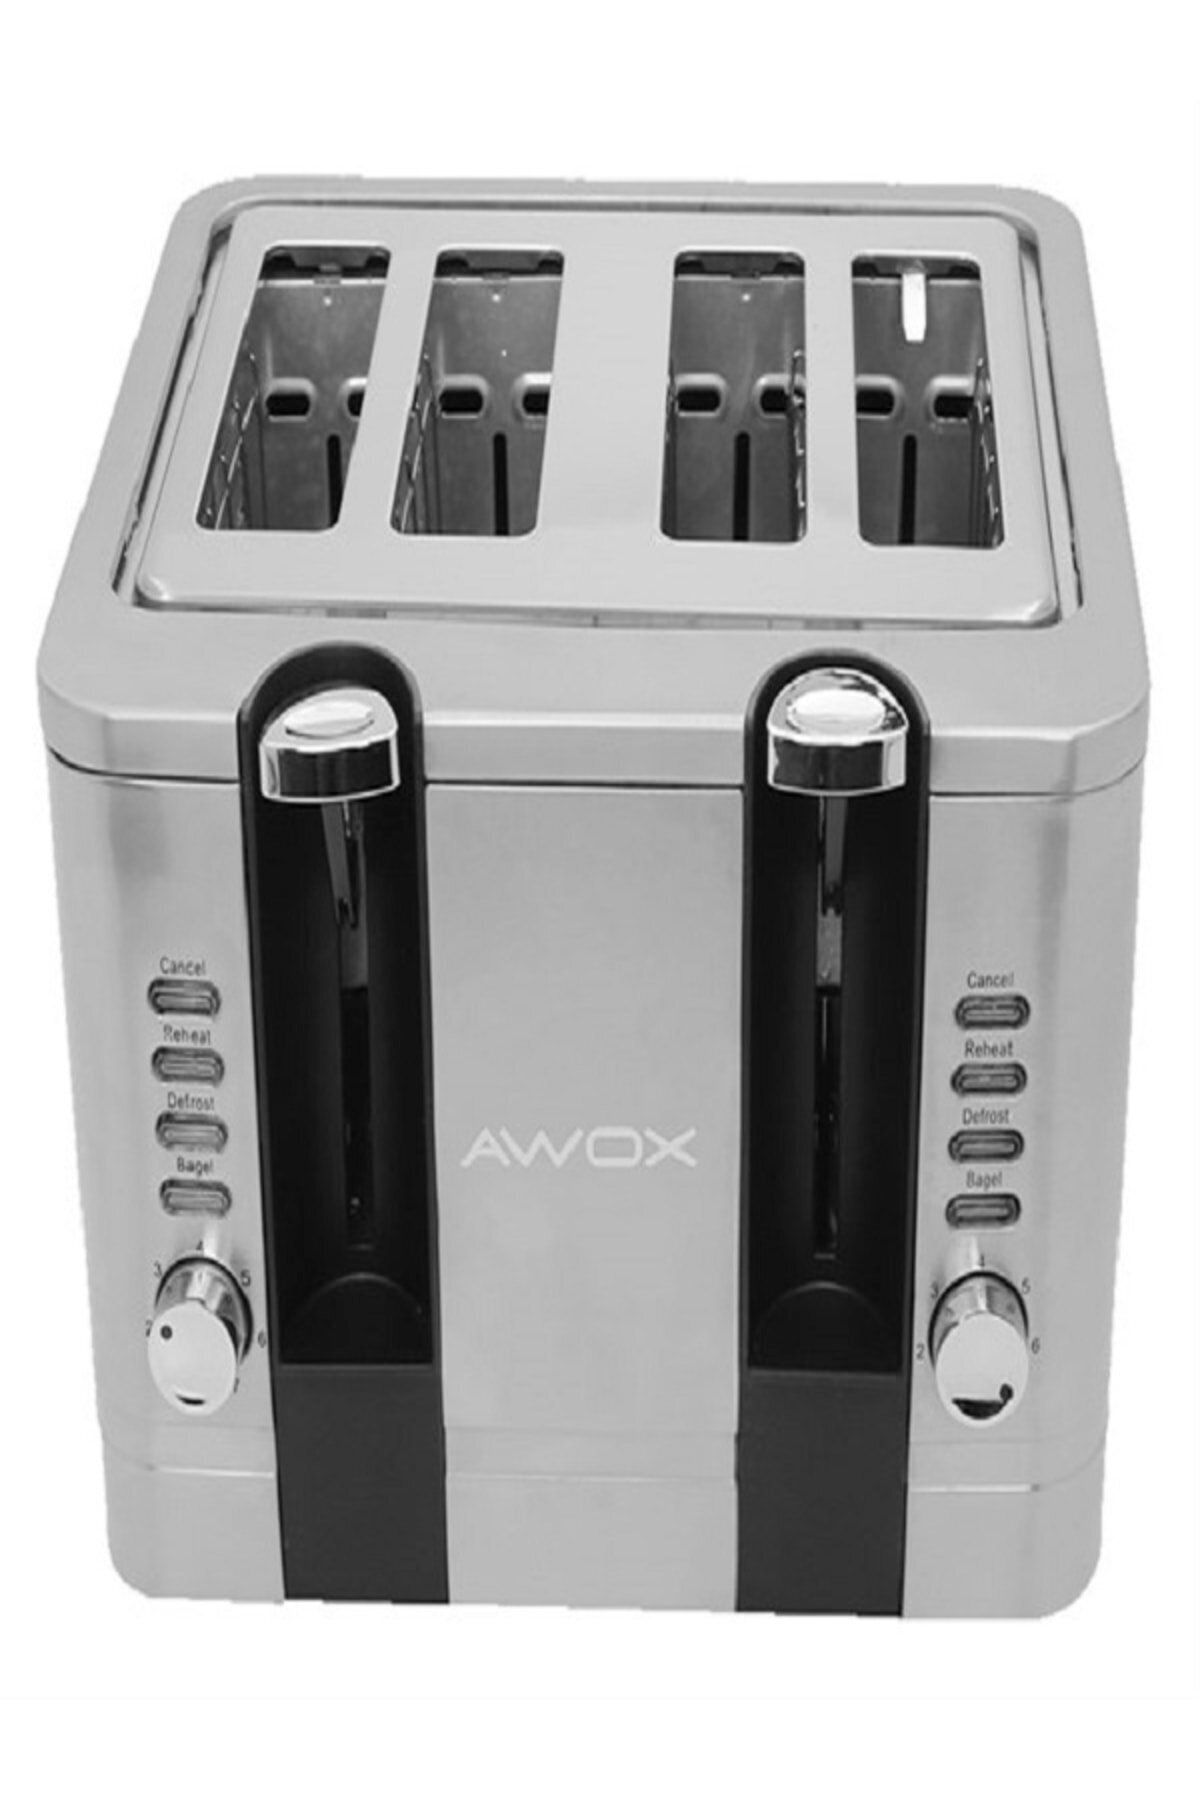 AWOX Red Slıce Pro Ekmek Kızartma Makinesi